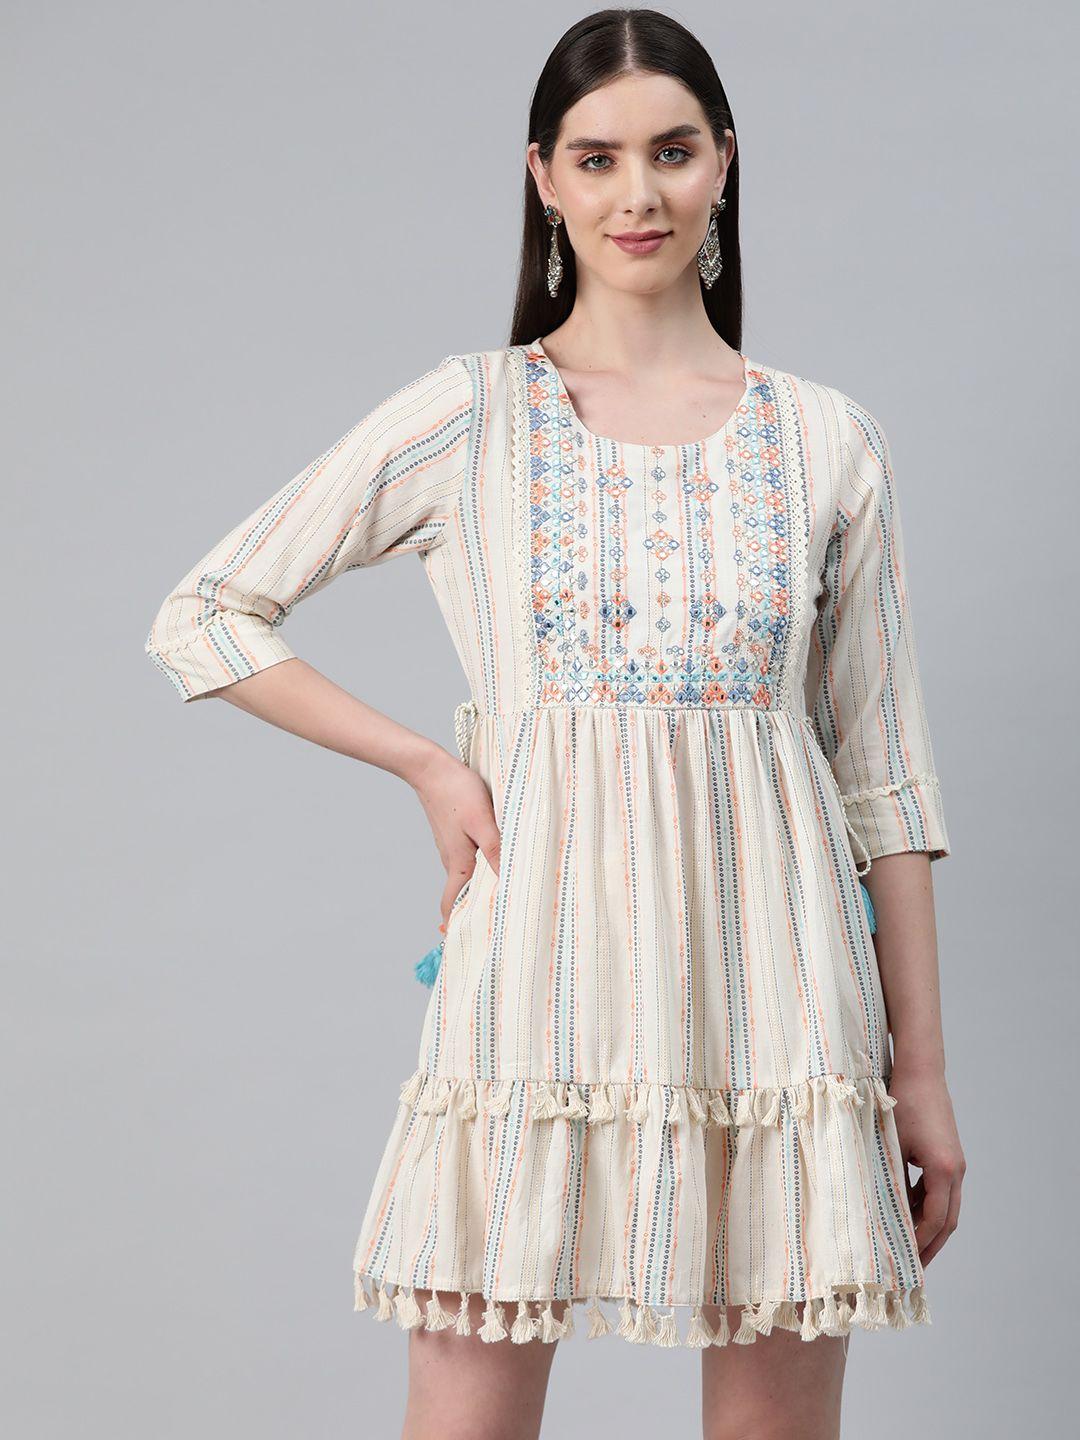 readiprint fashions printed embellished a-line dress